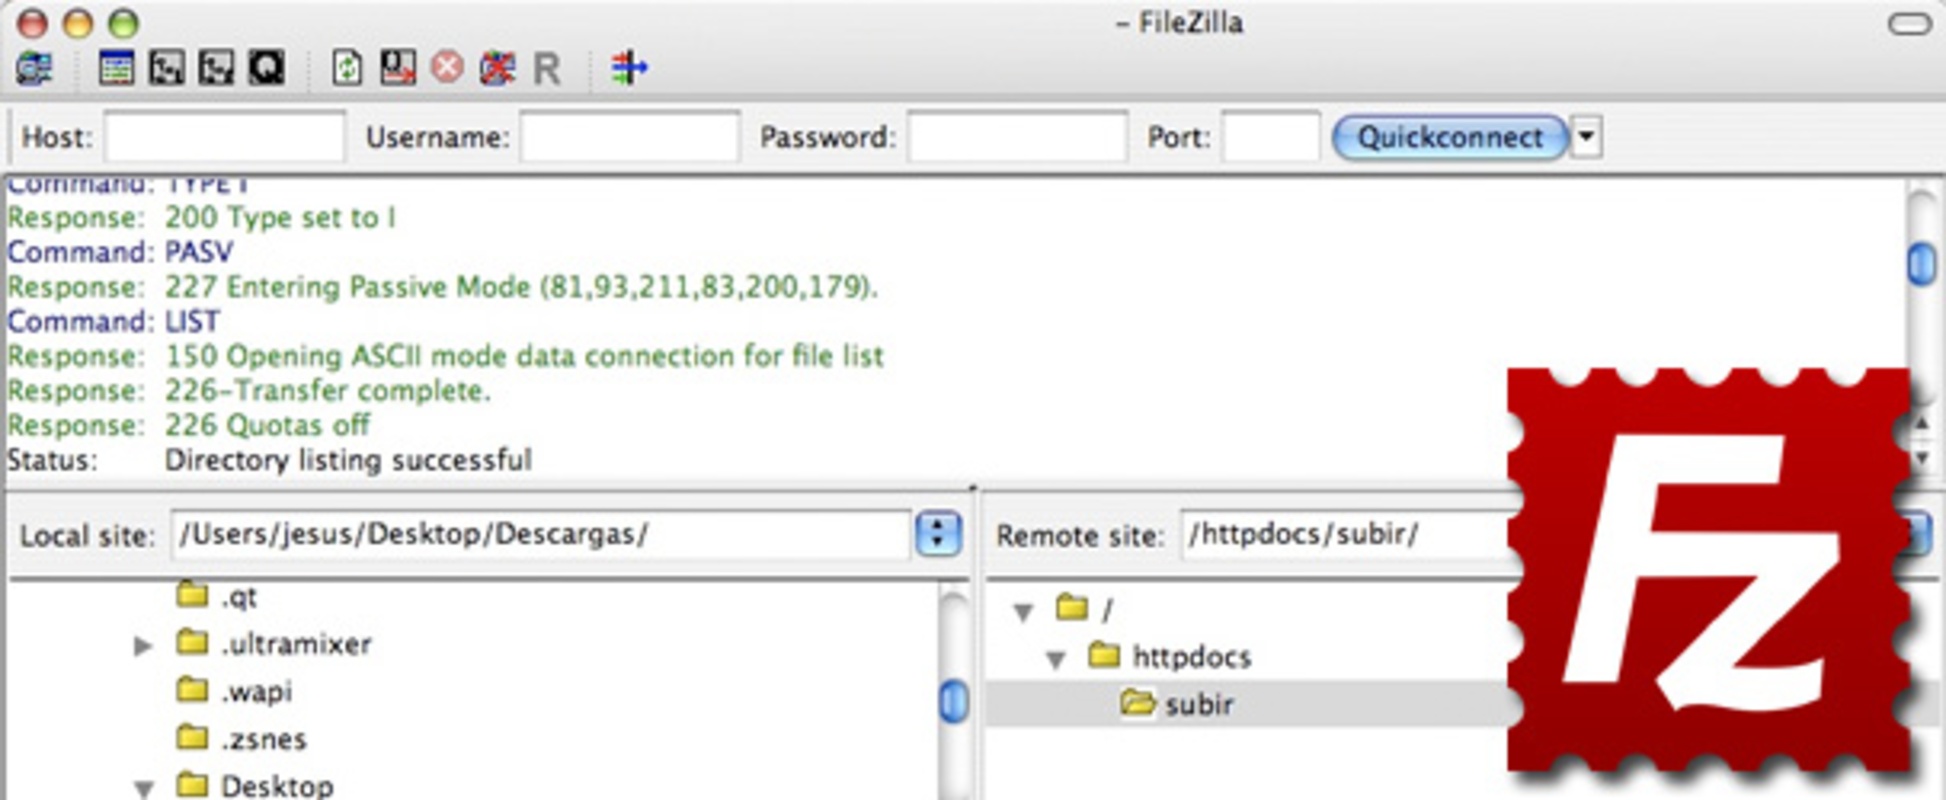 FileZilla 3.66.5 feature